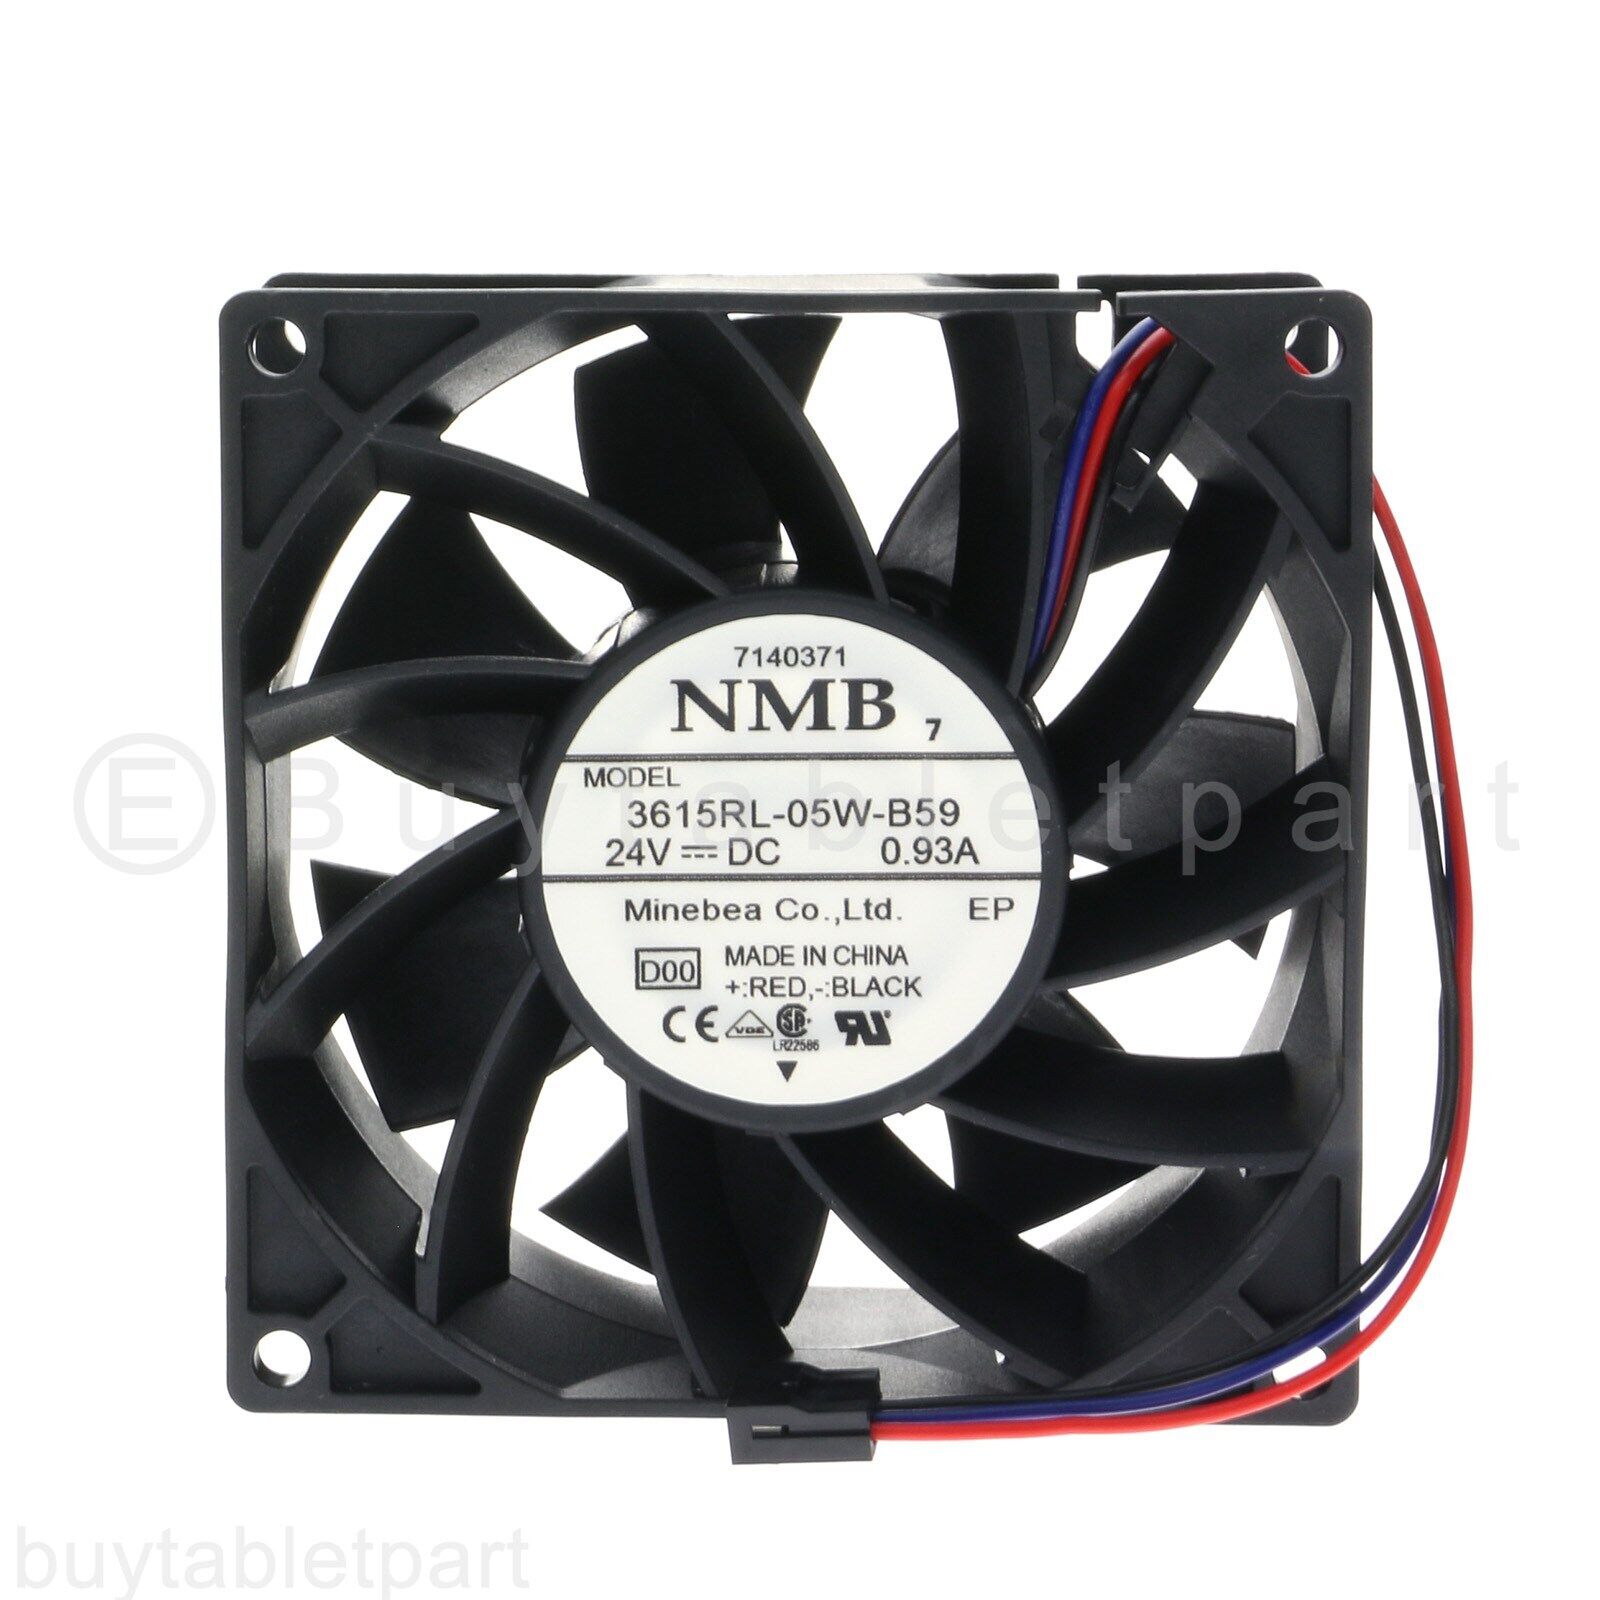 NEW Cooling Fan For NMB 3615RL-05W-B59 24V 0.93A